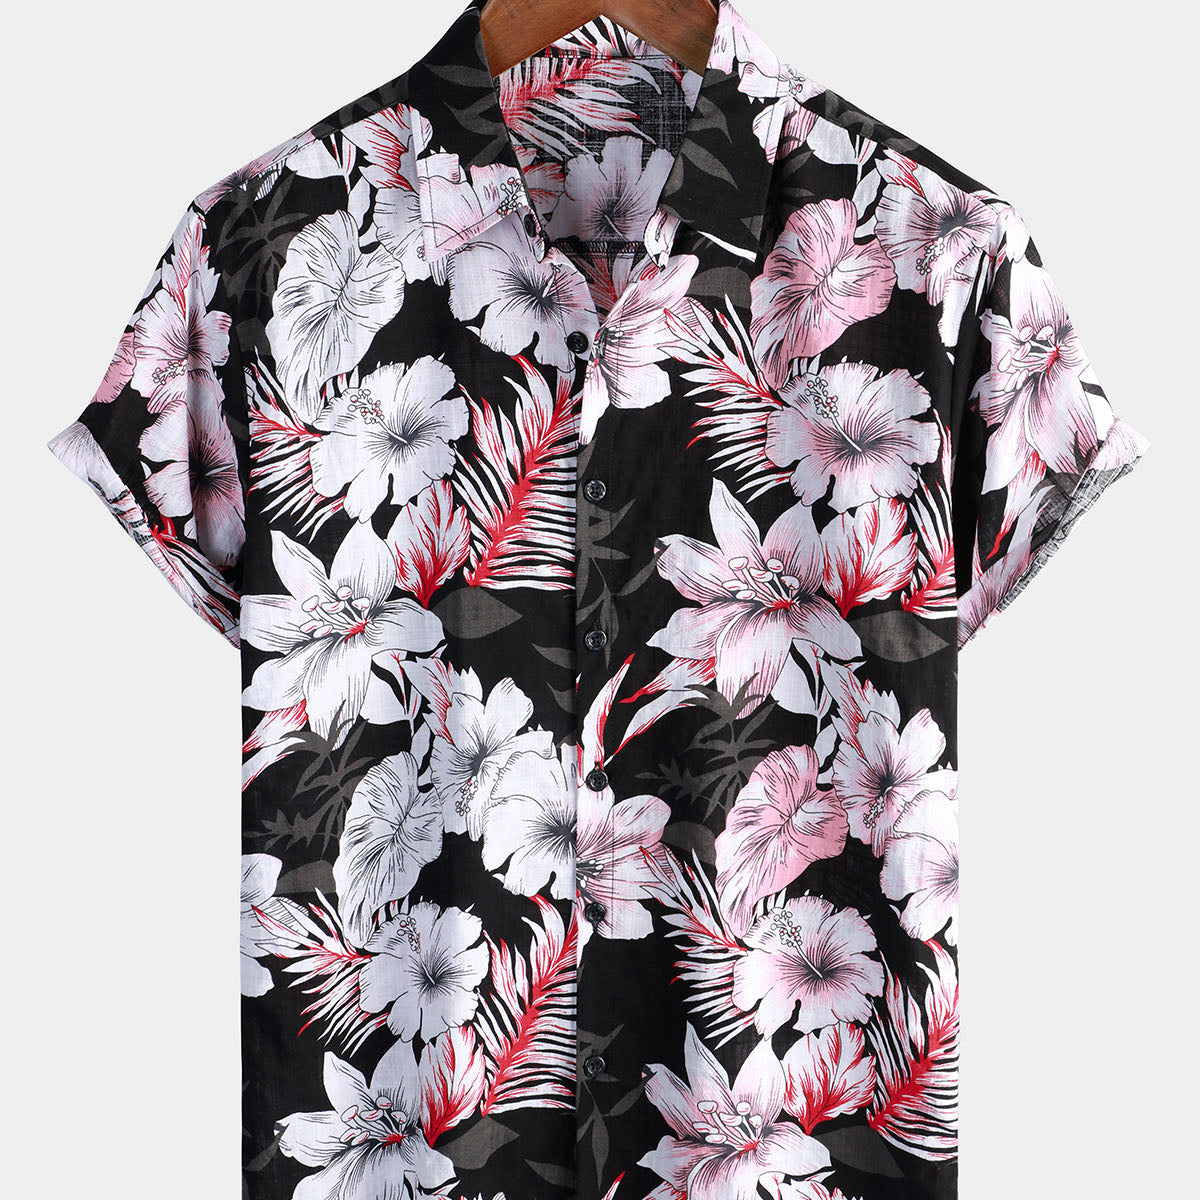 Chemise à manches courtes hawaïenne à fleurs roses tropicales pour hommes Hibiscus Summer Holiday Beach